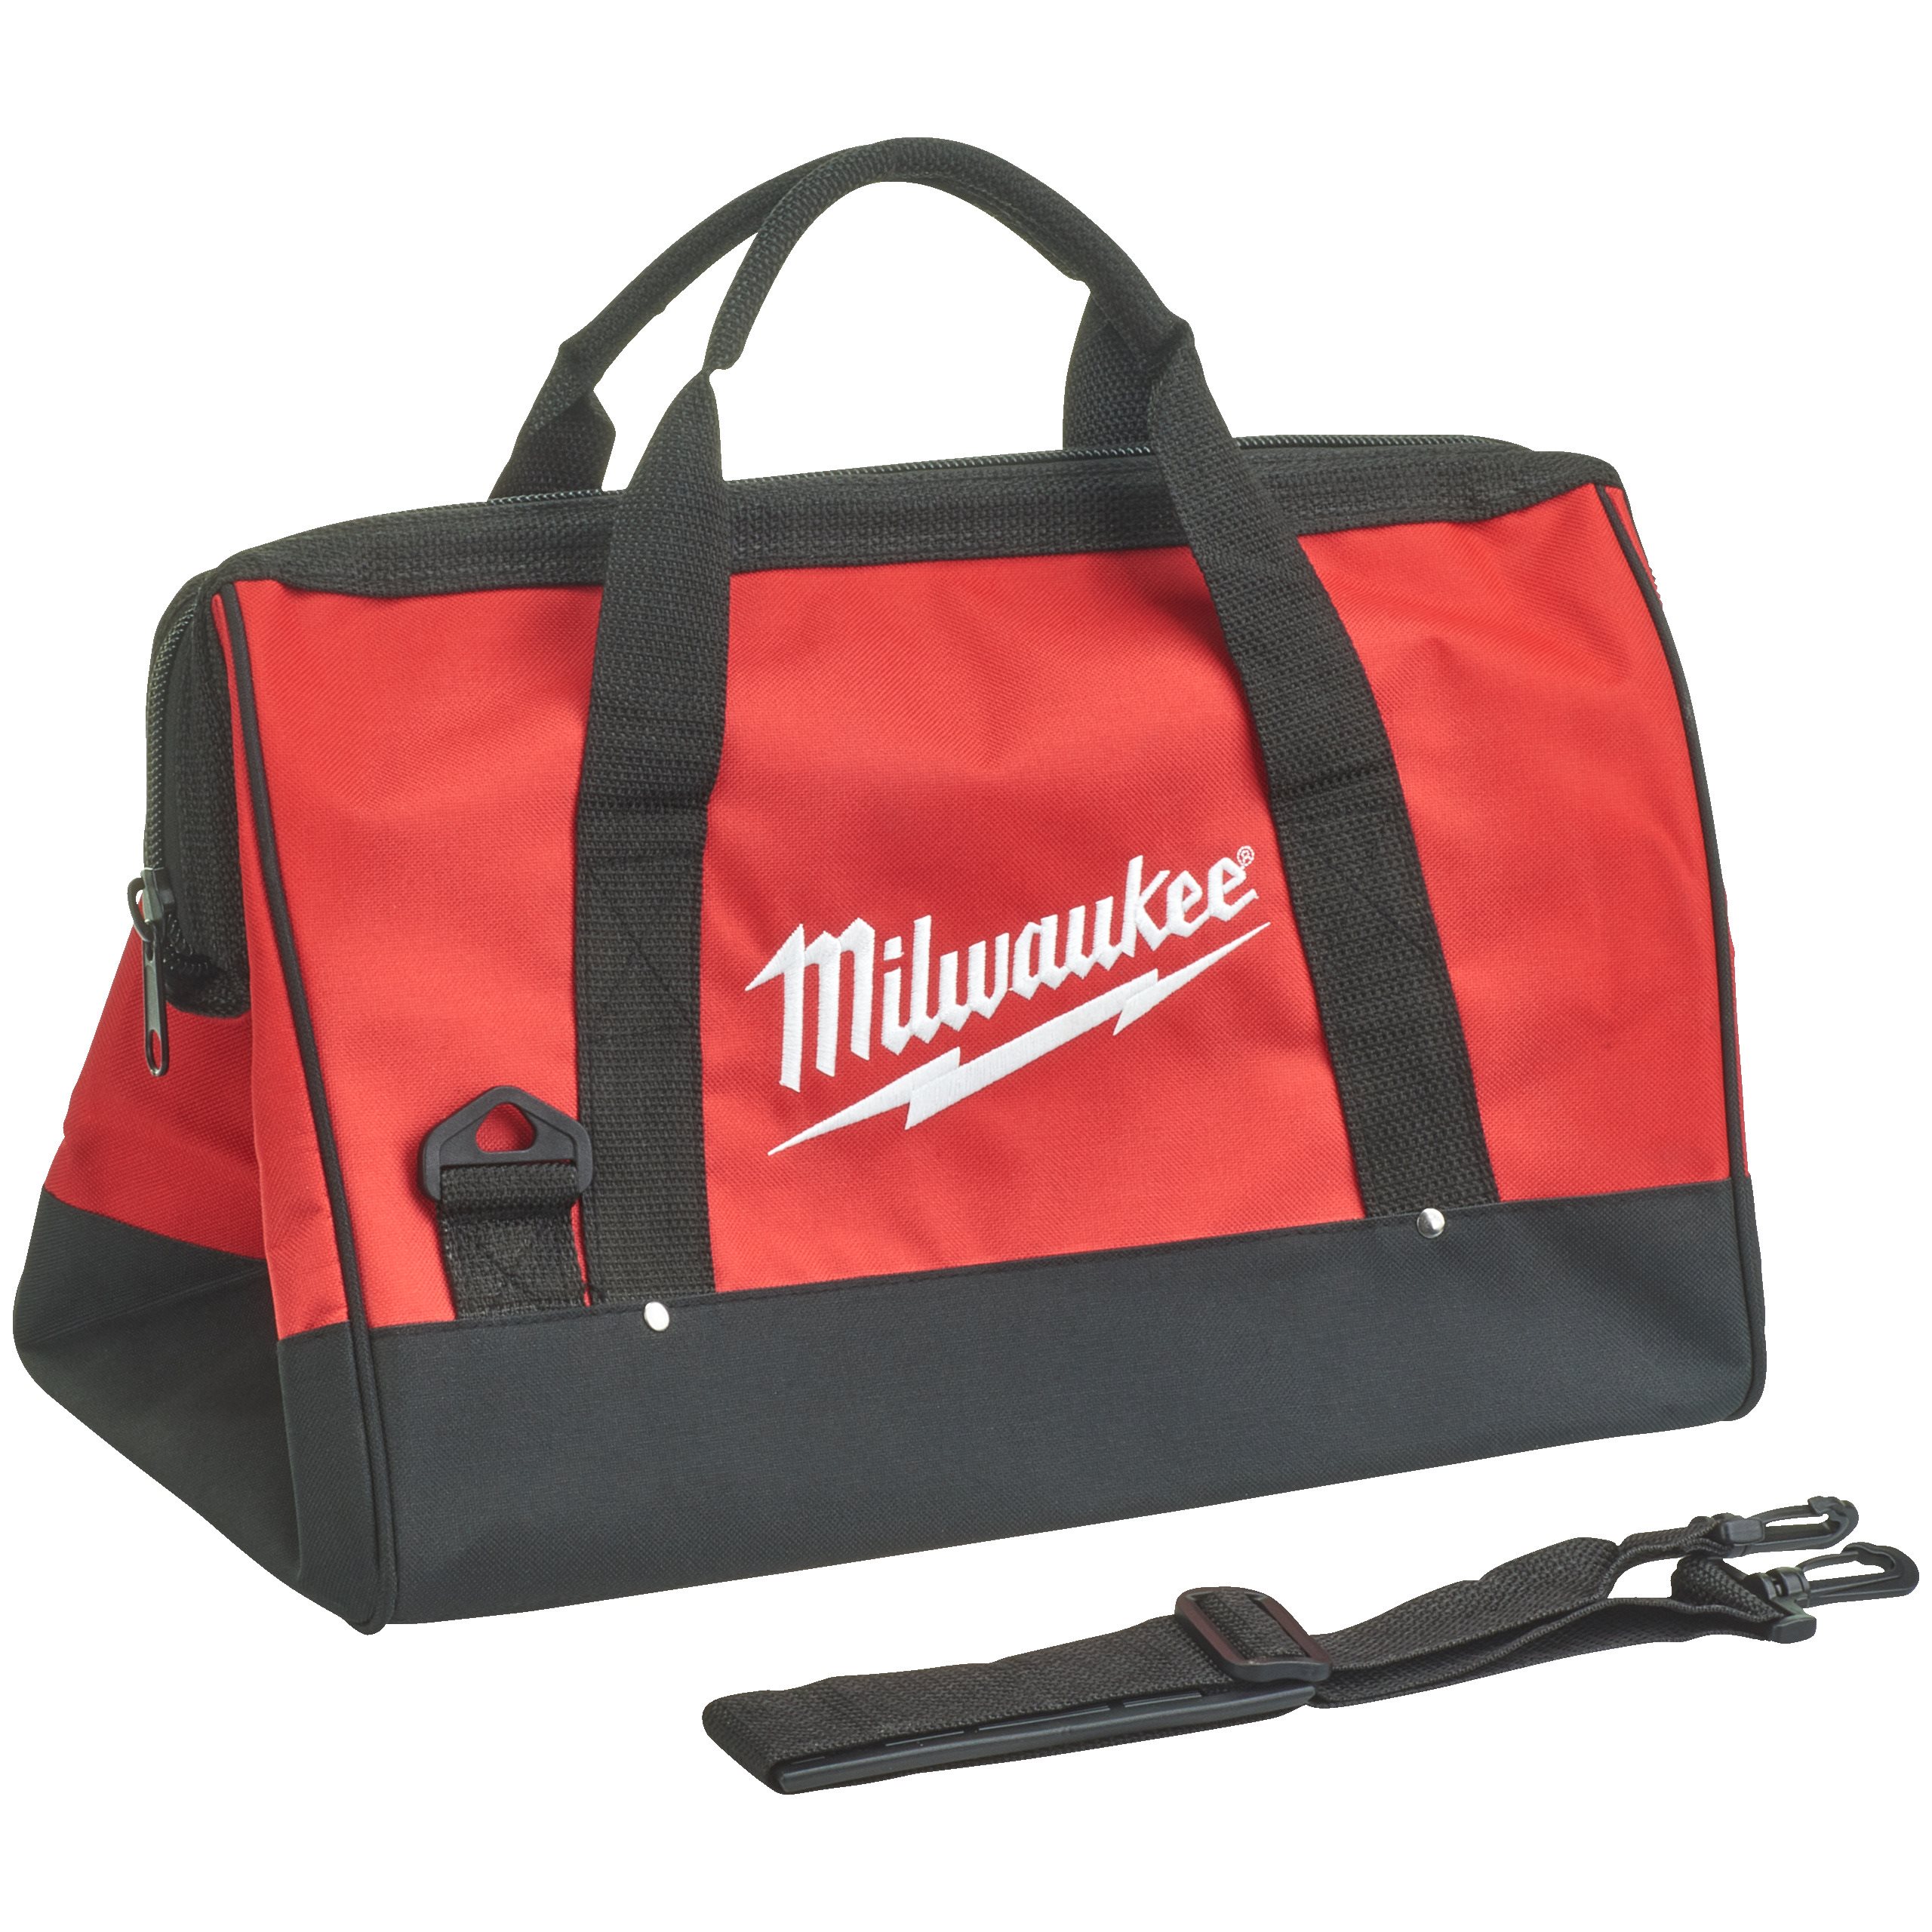 Inches Brand New Medium Milwaukee Heavy Duty Contractors Bag 16 x 10 x 10 